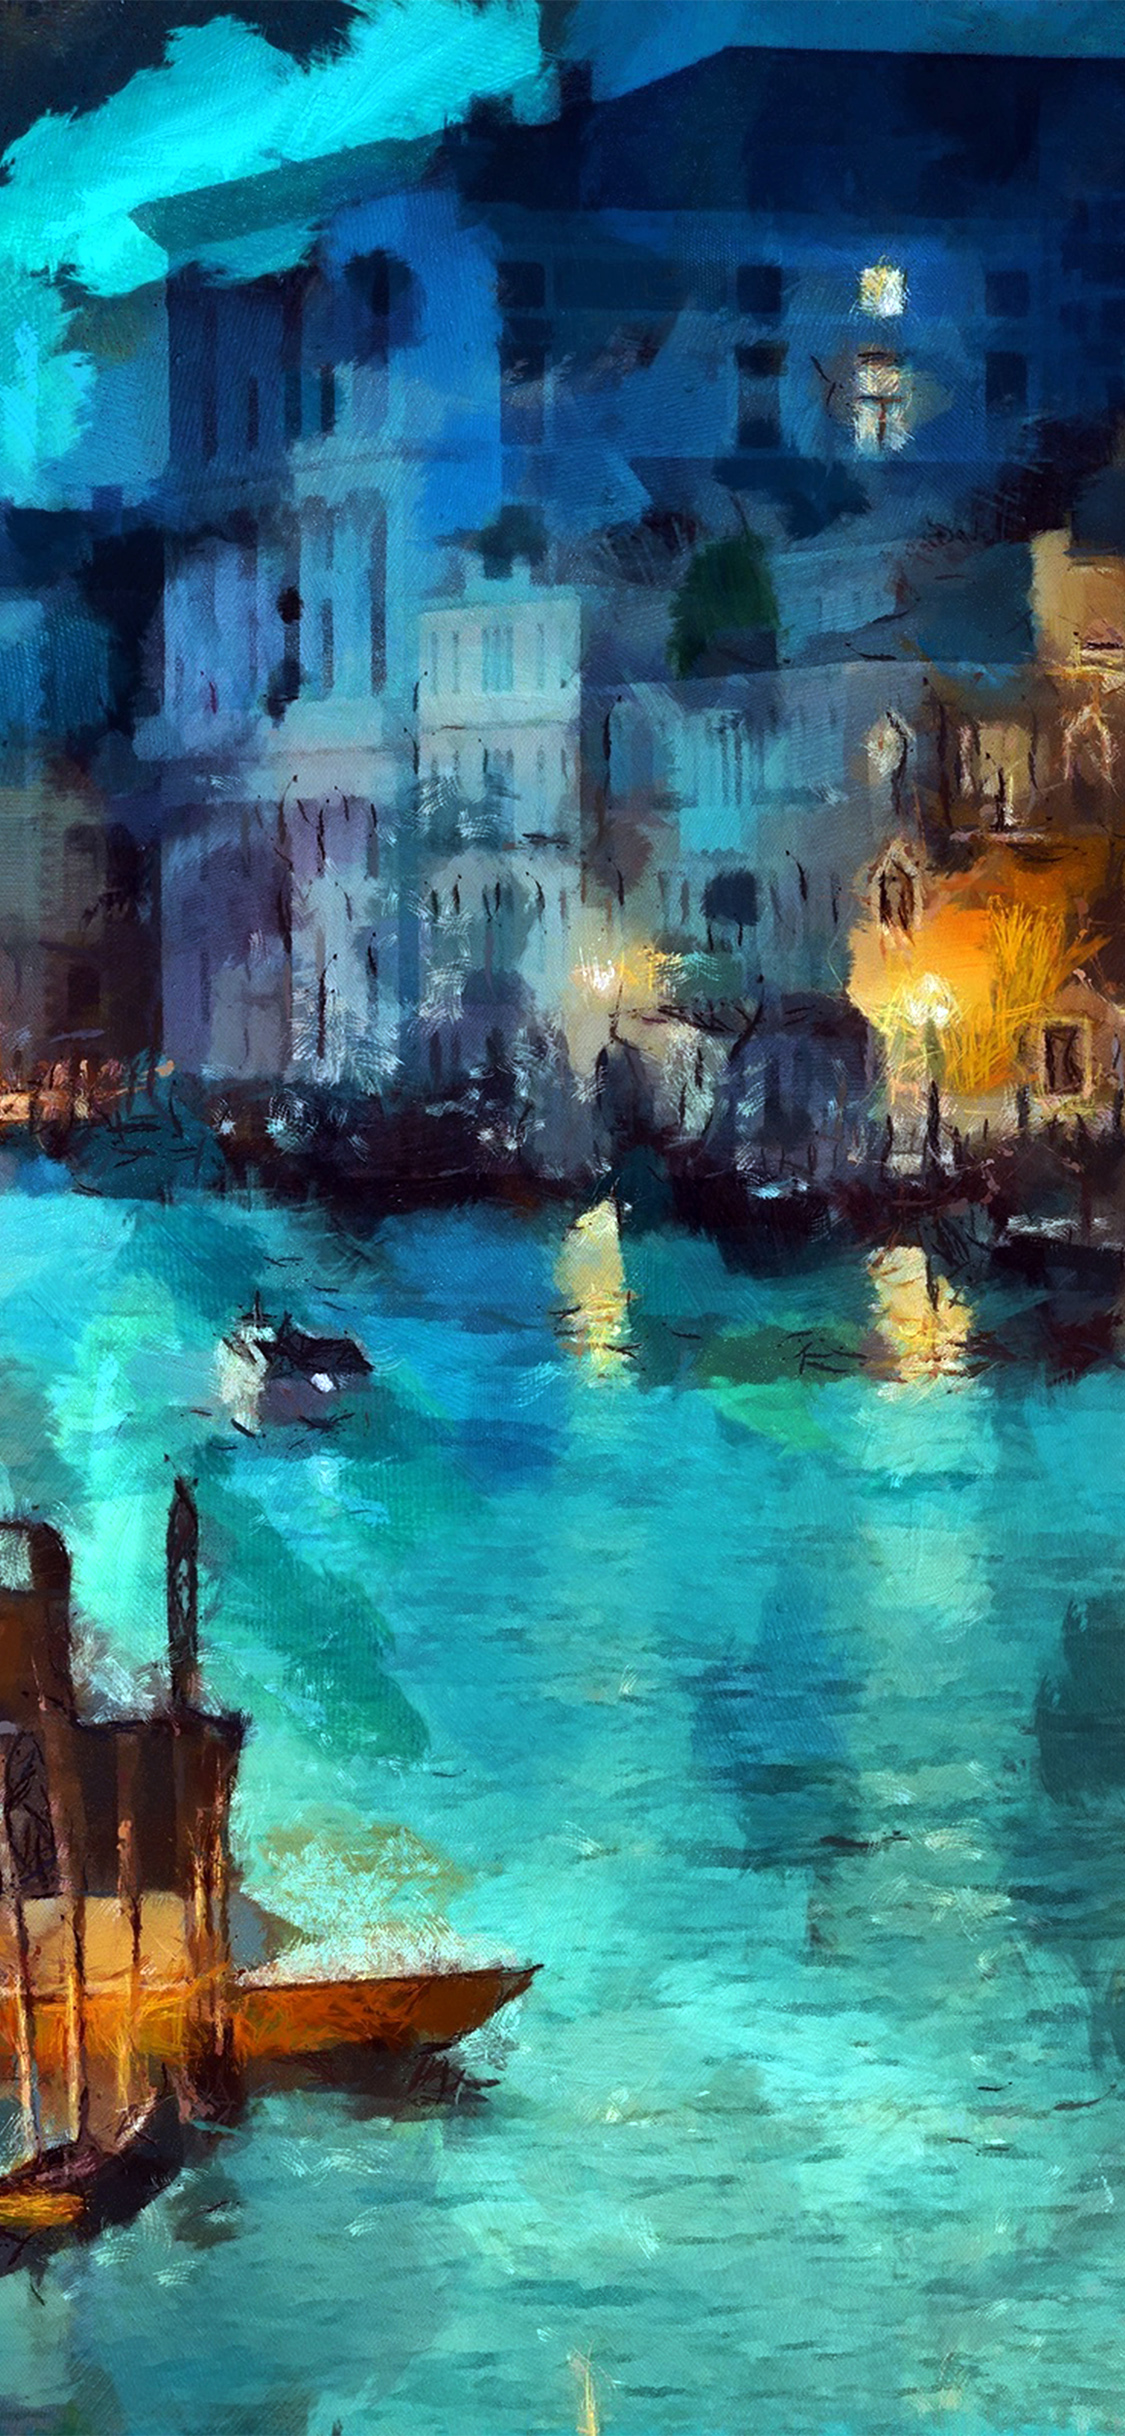 iPhone X wallpaper. art classic painting water lake night blue